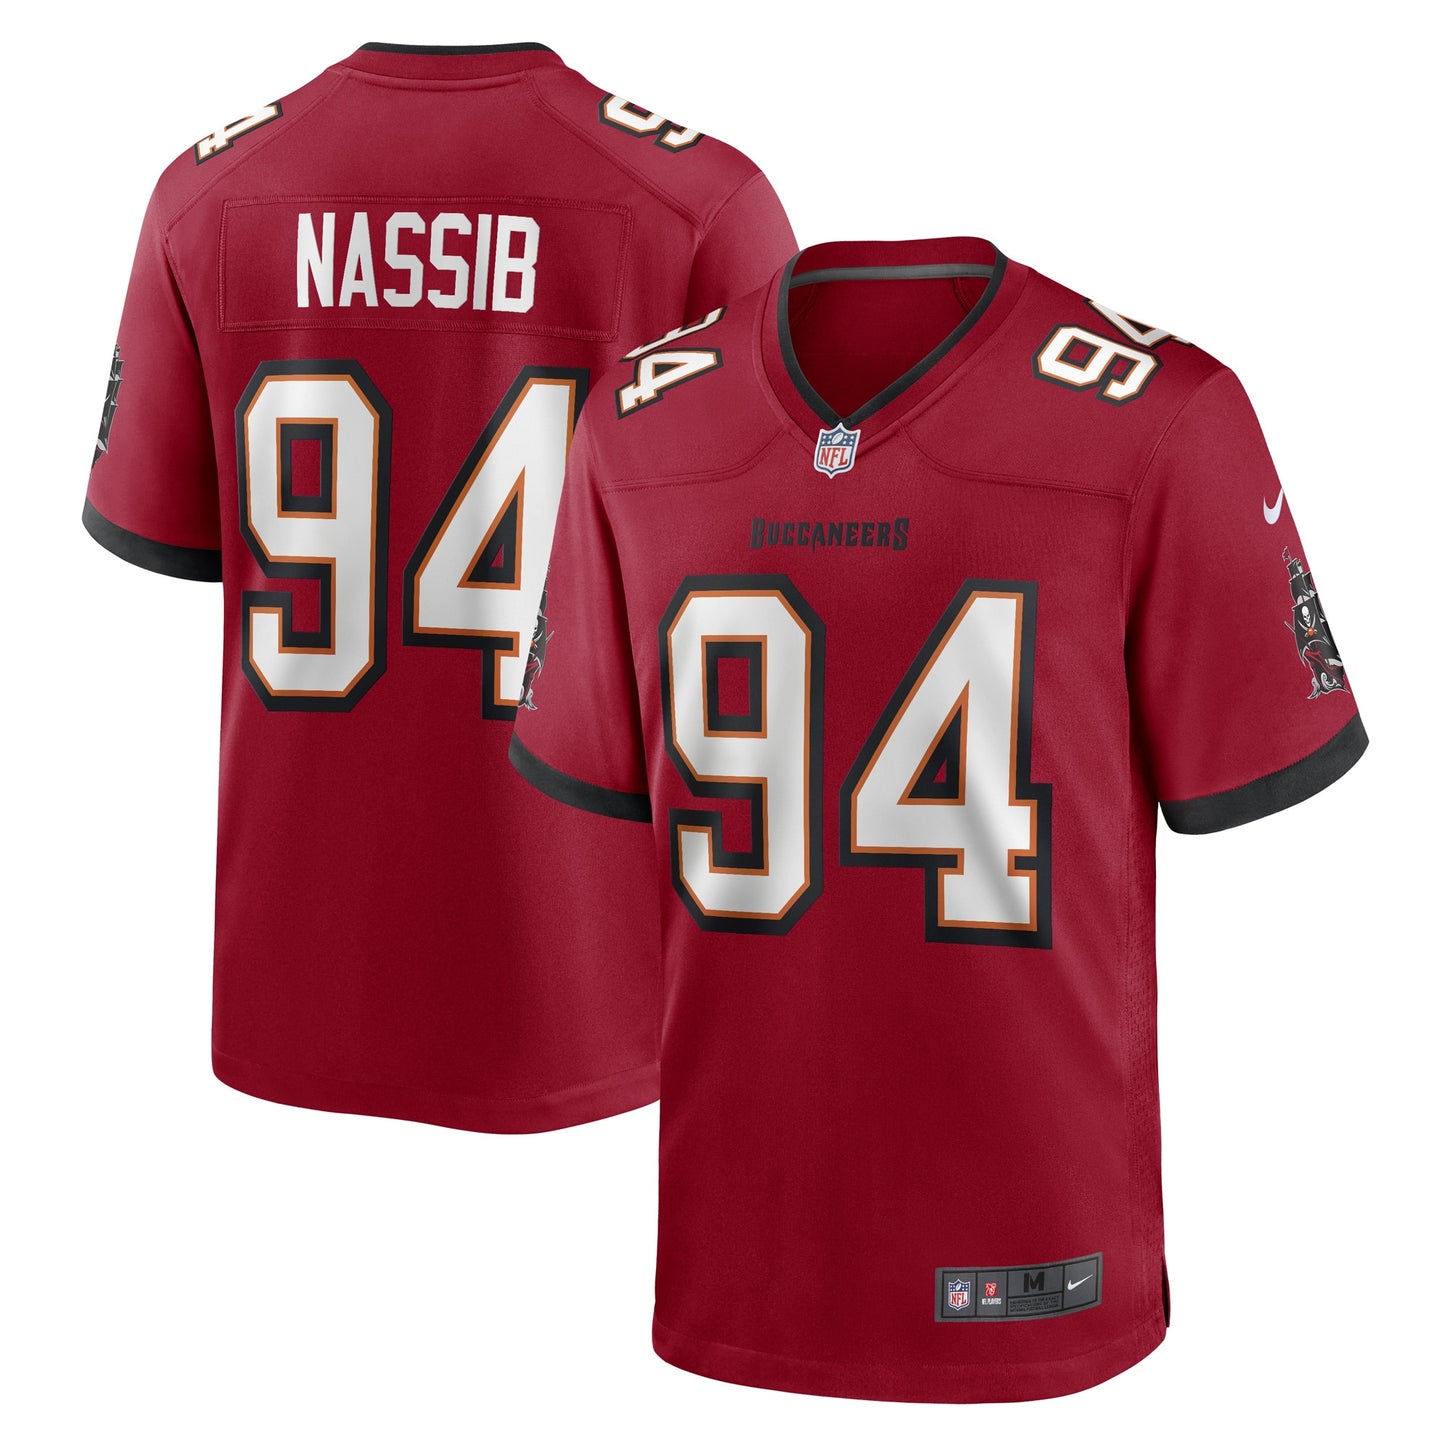 Carl Nassib Tampa Bay Buccaneers Nike Game Player Jersey - Red